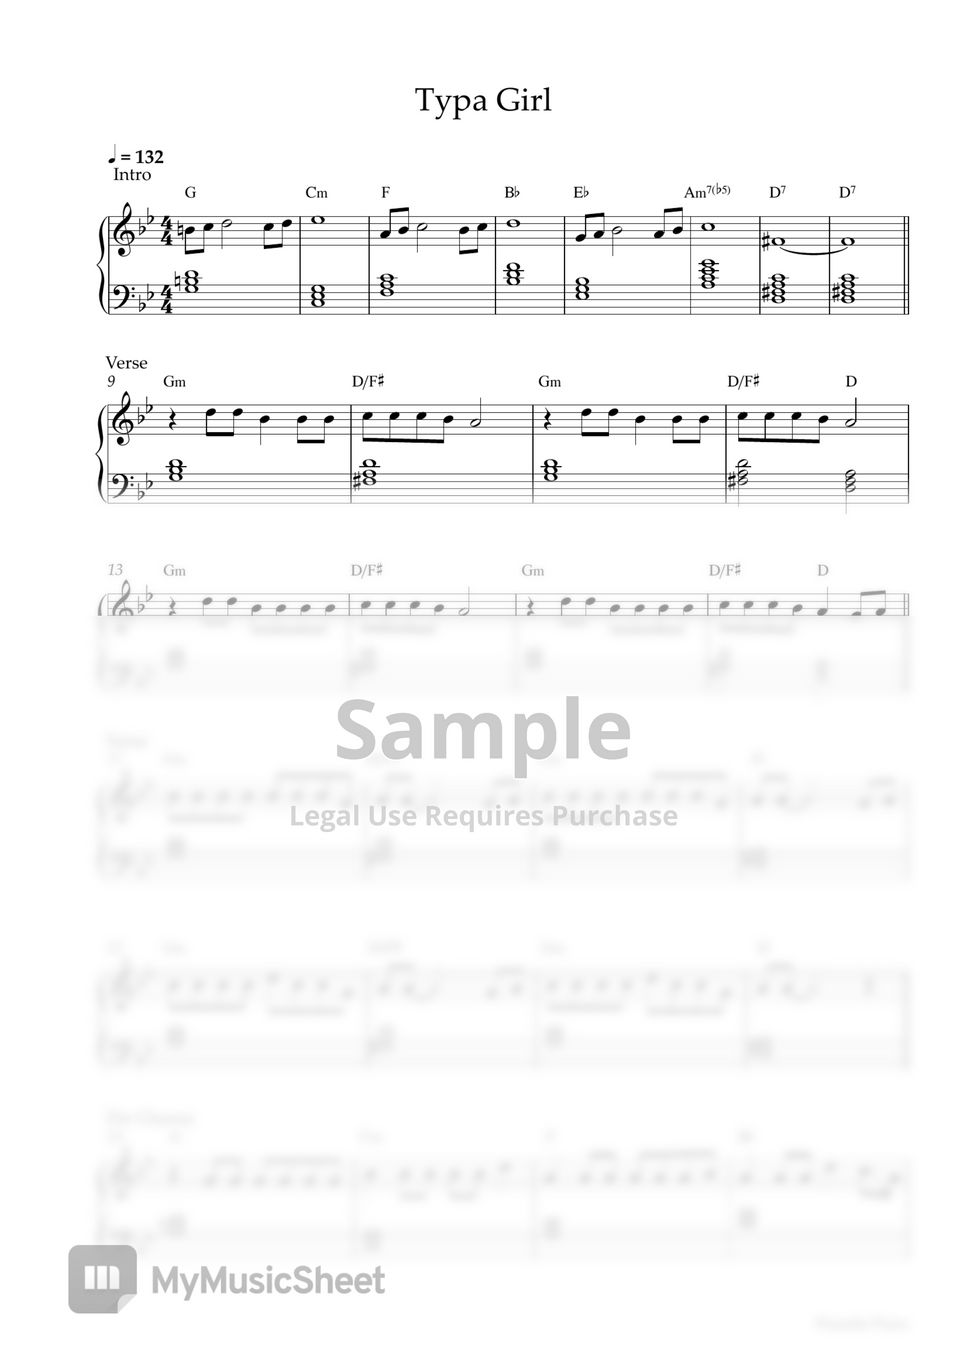 BLACKPINK - Typa Girl (MEDIUM PIANO SHEET) by Pianella Piano